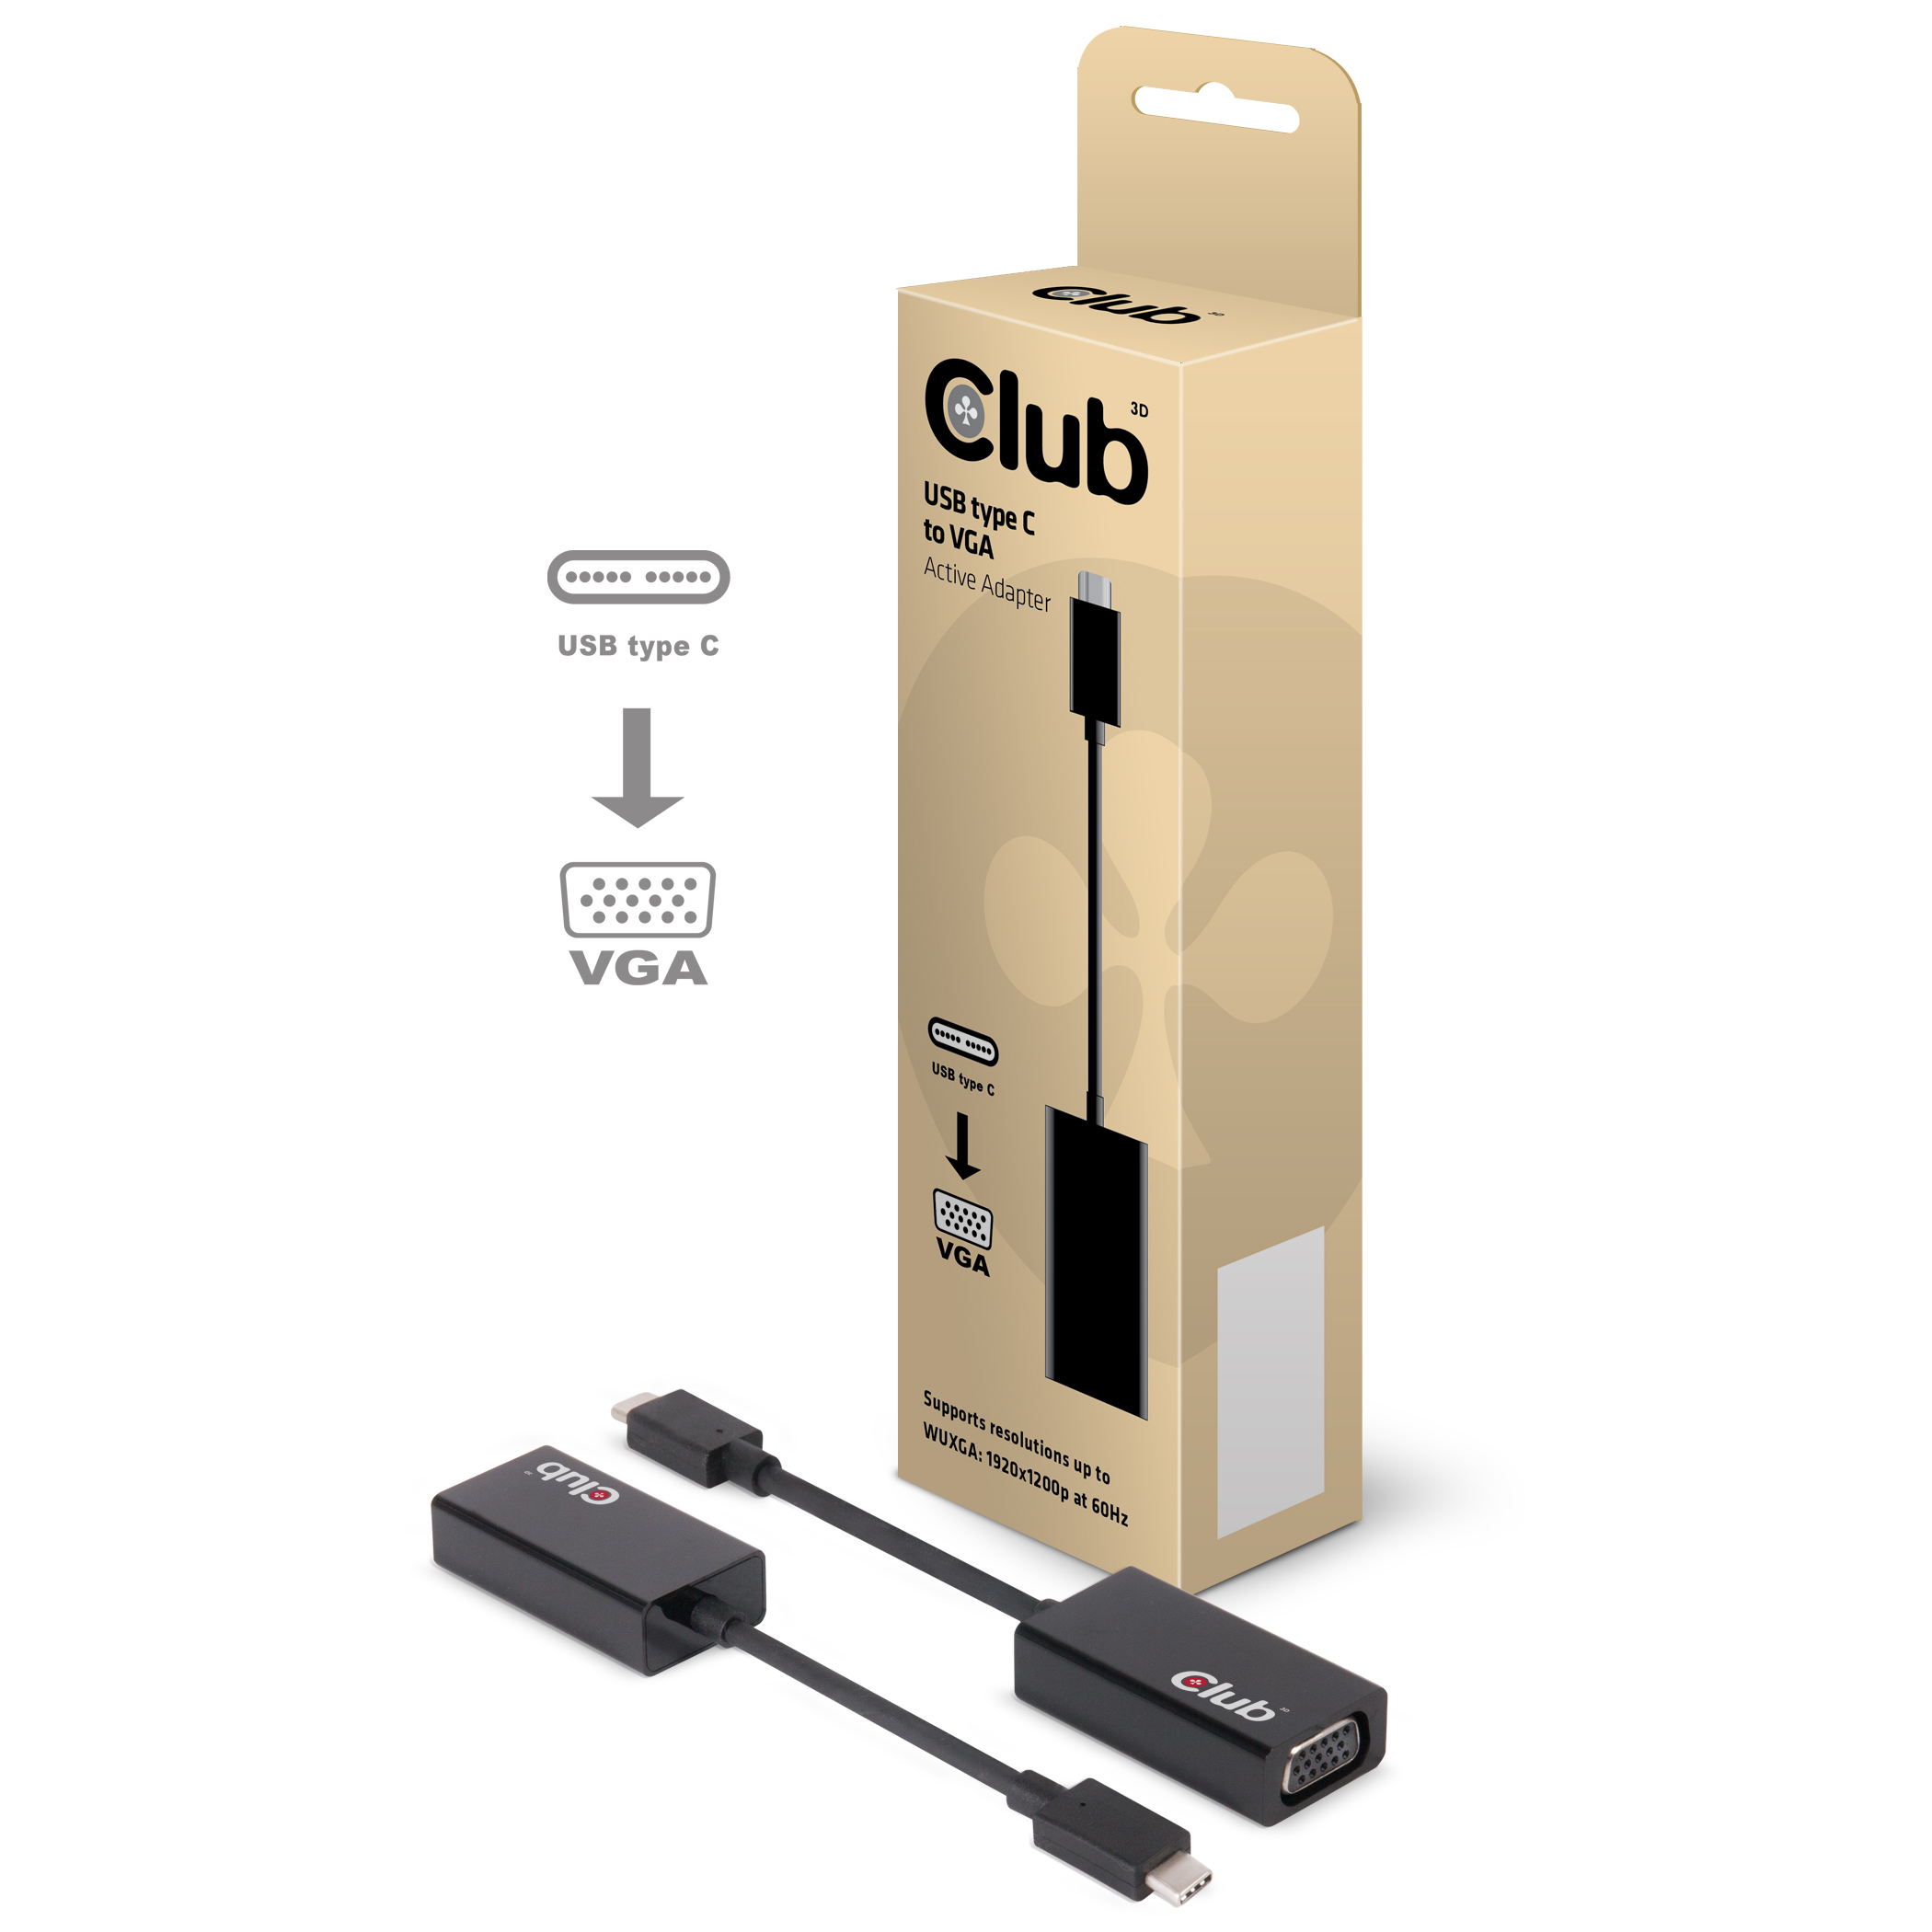 Club 3D USB 3.1 Typ C to VGA Aktiver Adapter